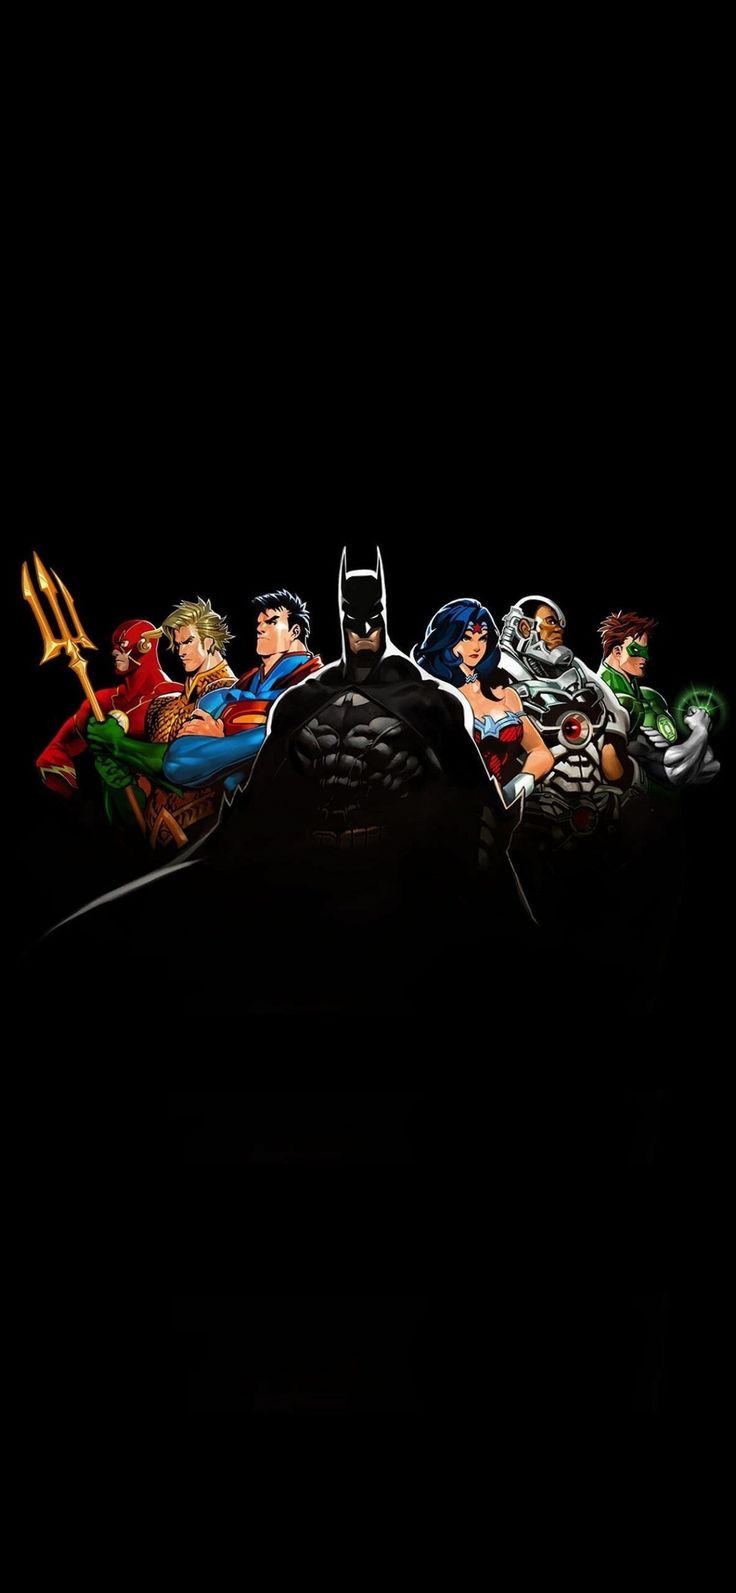 Minimal, justice league, superheroes, art, 1125x2436 wallpaper. Justice league artwork, Justice league, Justice league superheroes